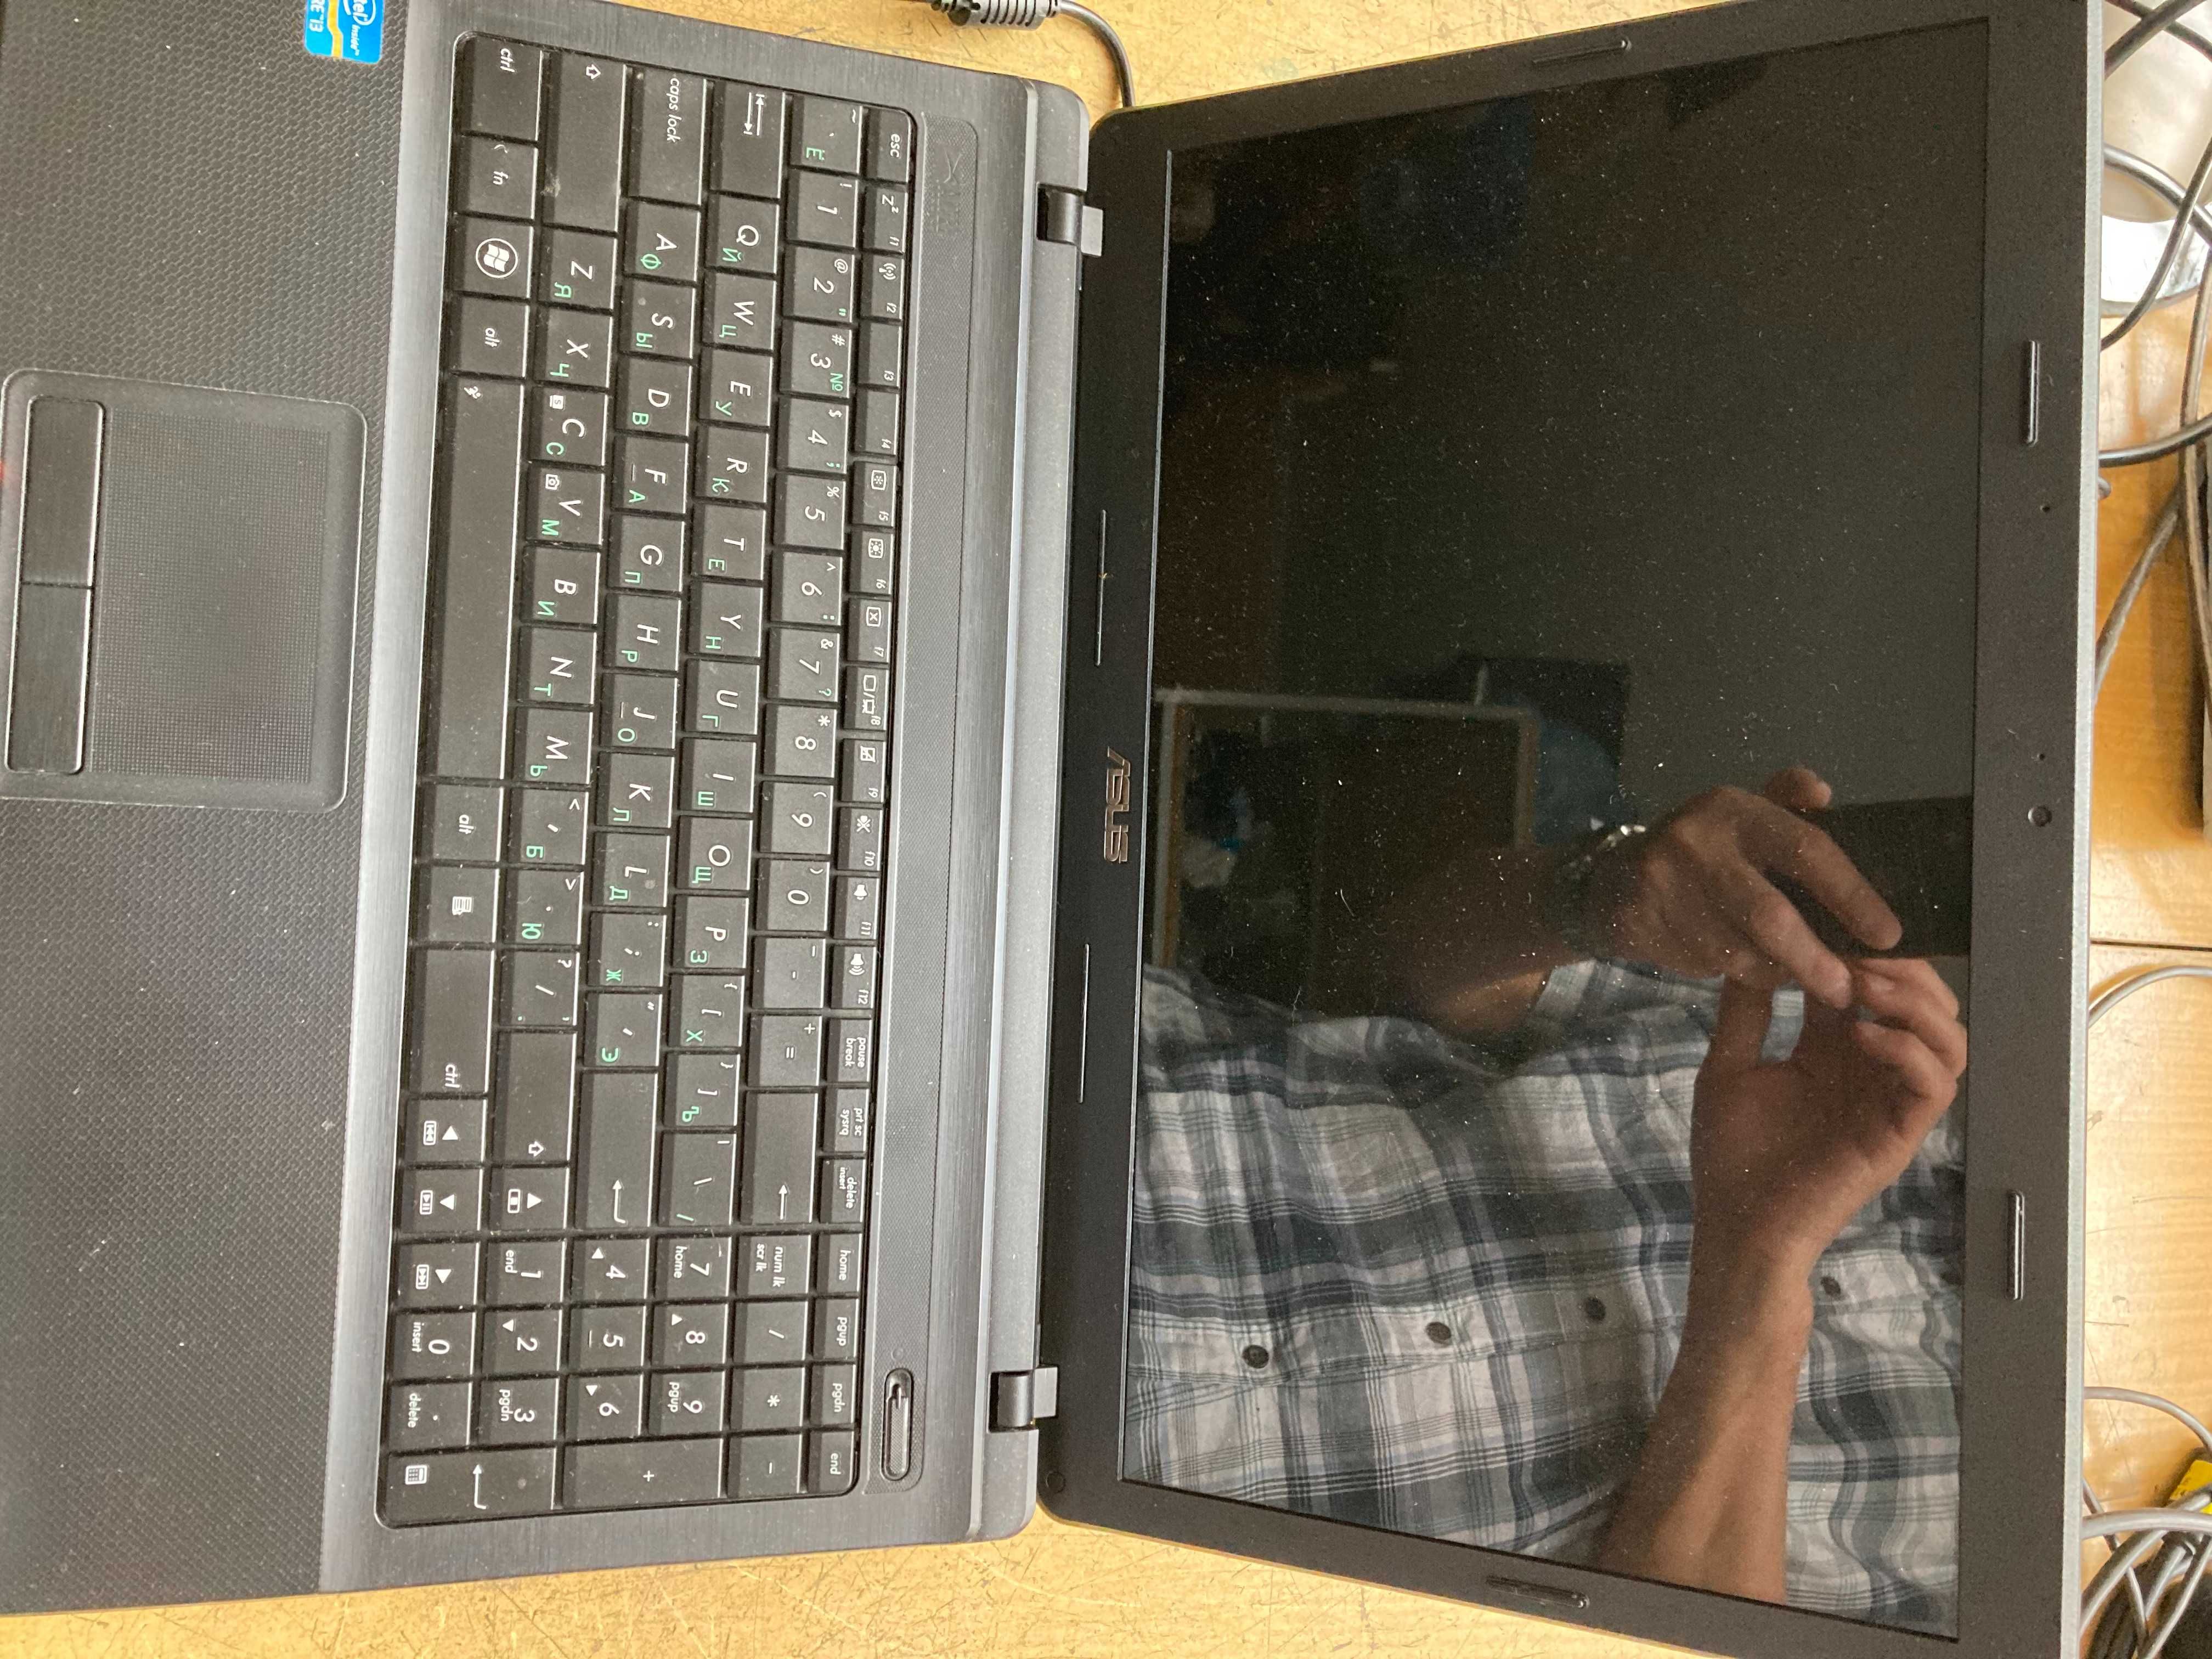 Ноутбук ASUS X54C